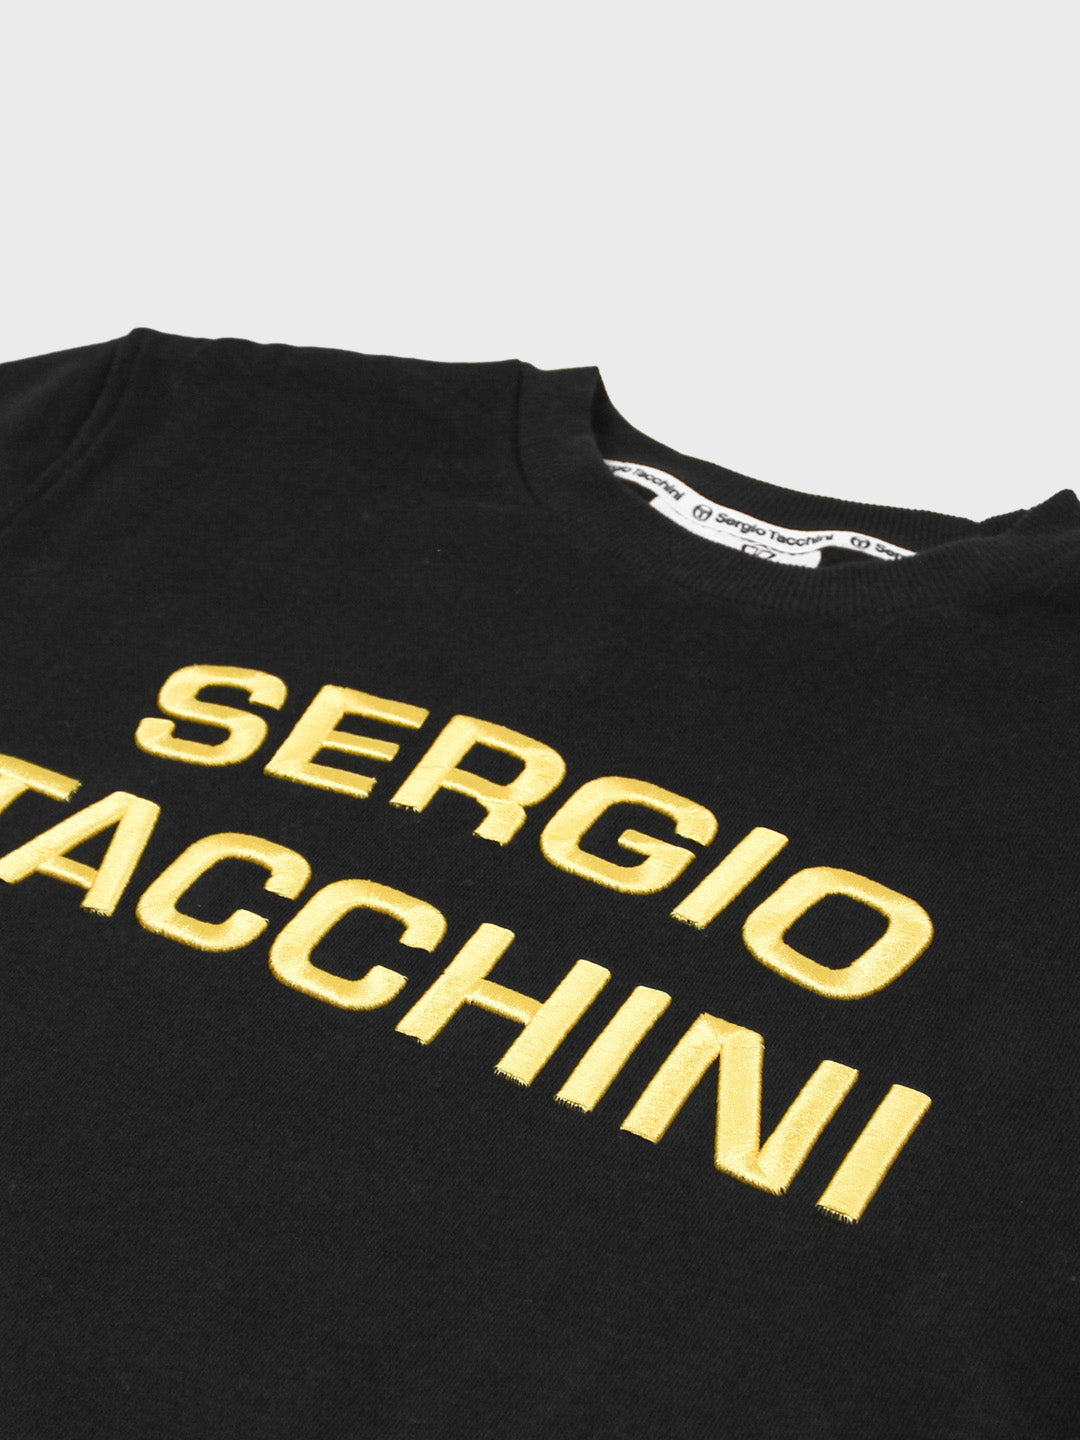 Sergio tacchini sweater